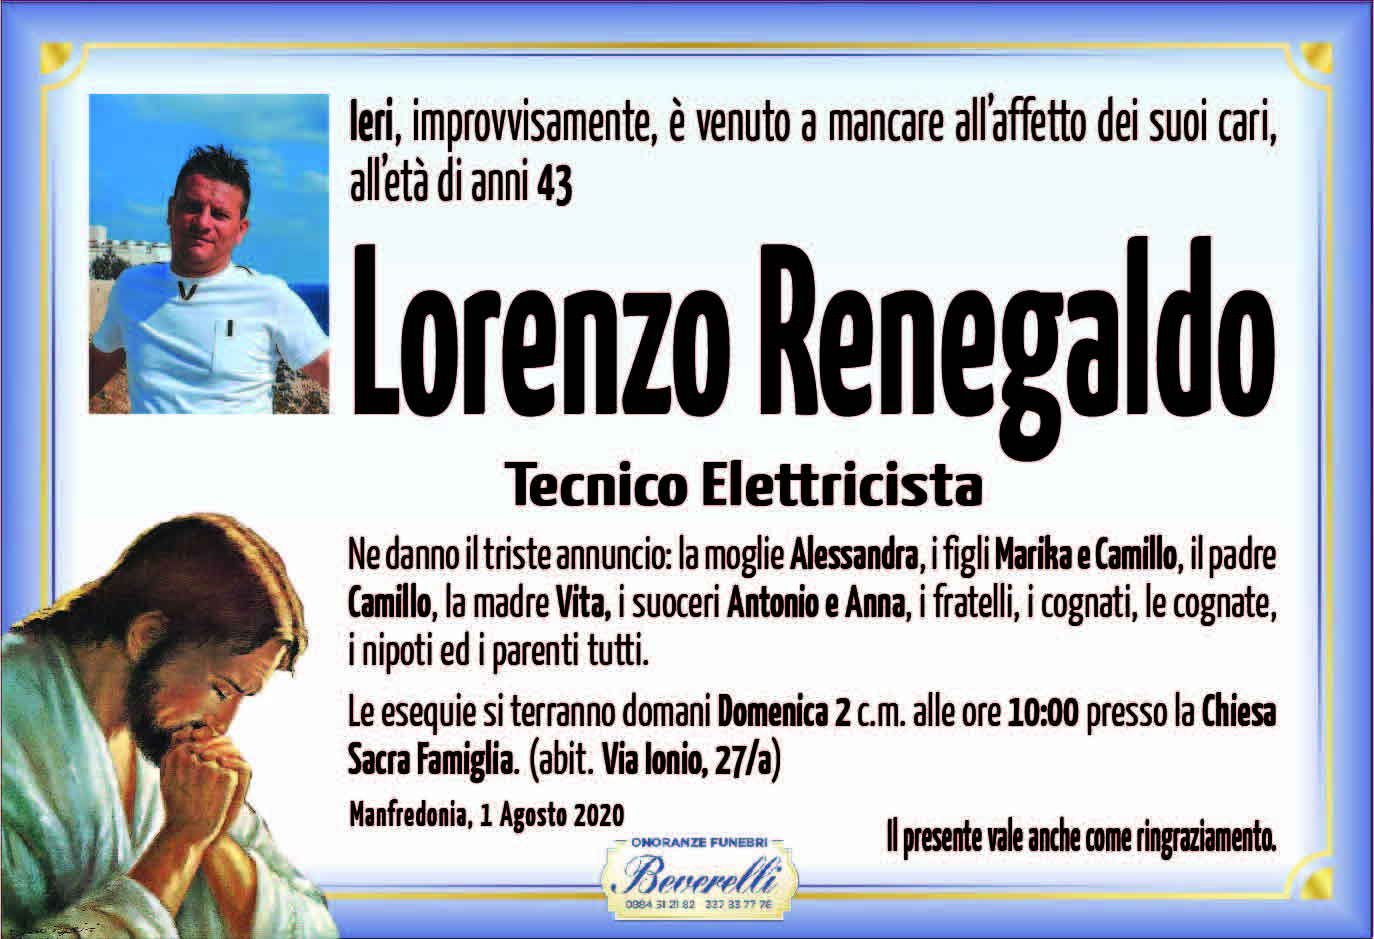 Lorenzo Renegaldo